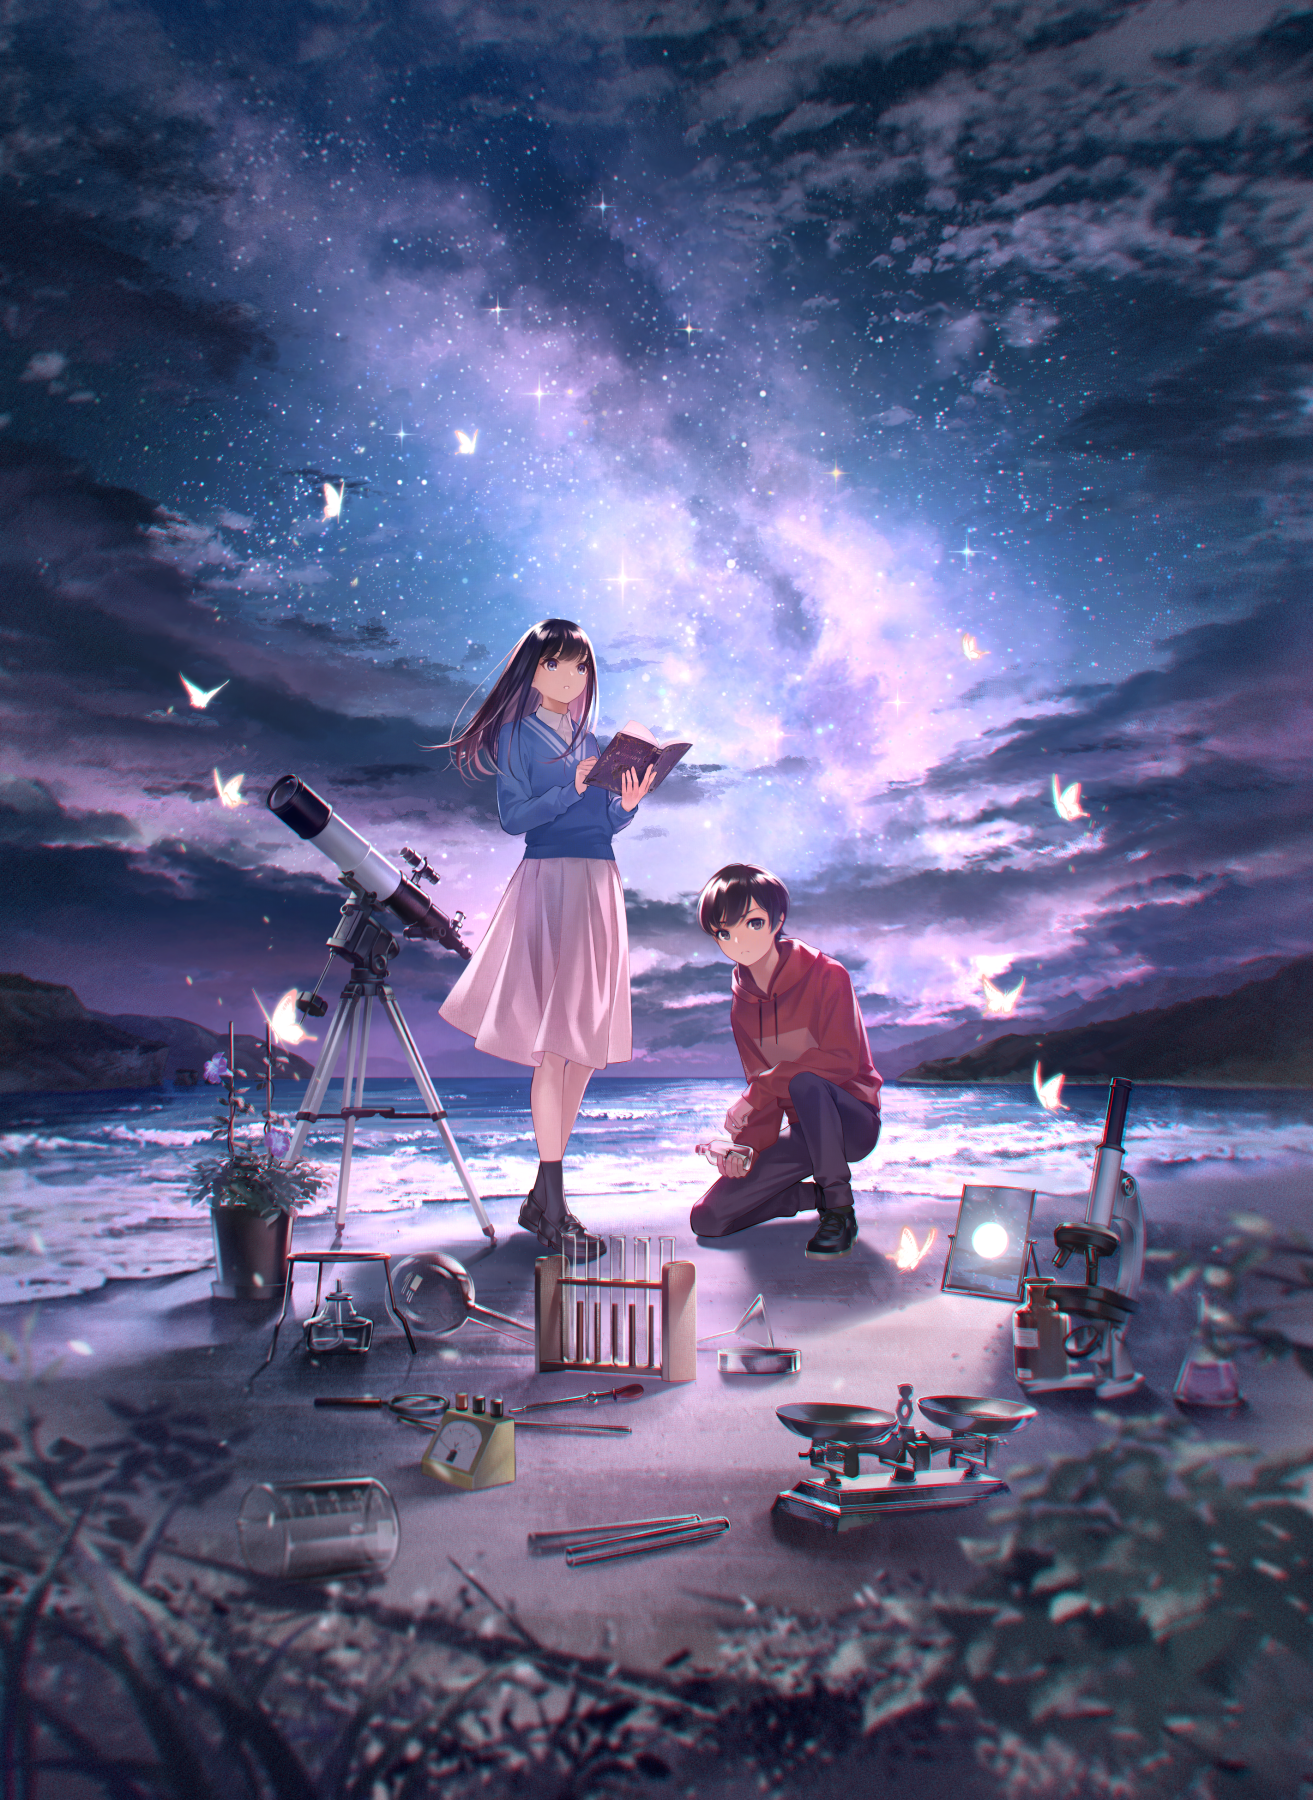 Sawasawa Vertical Anime Girls Anime Boys Couple Beach Water Waves Starry Night Stars Looking Up Sky  1313x1800